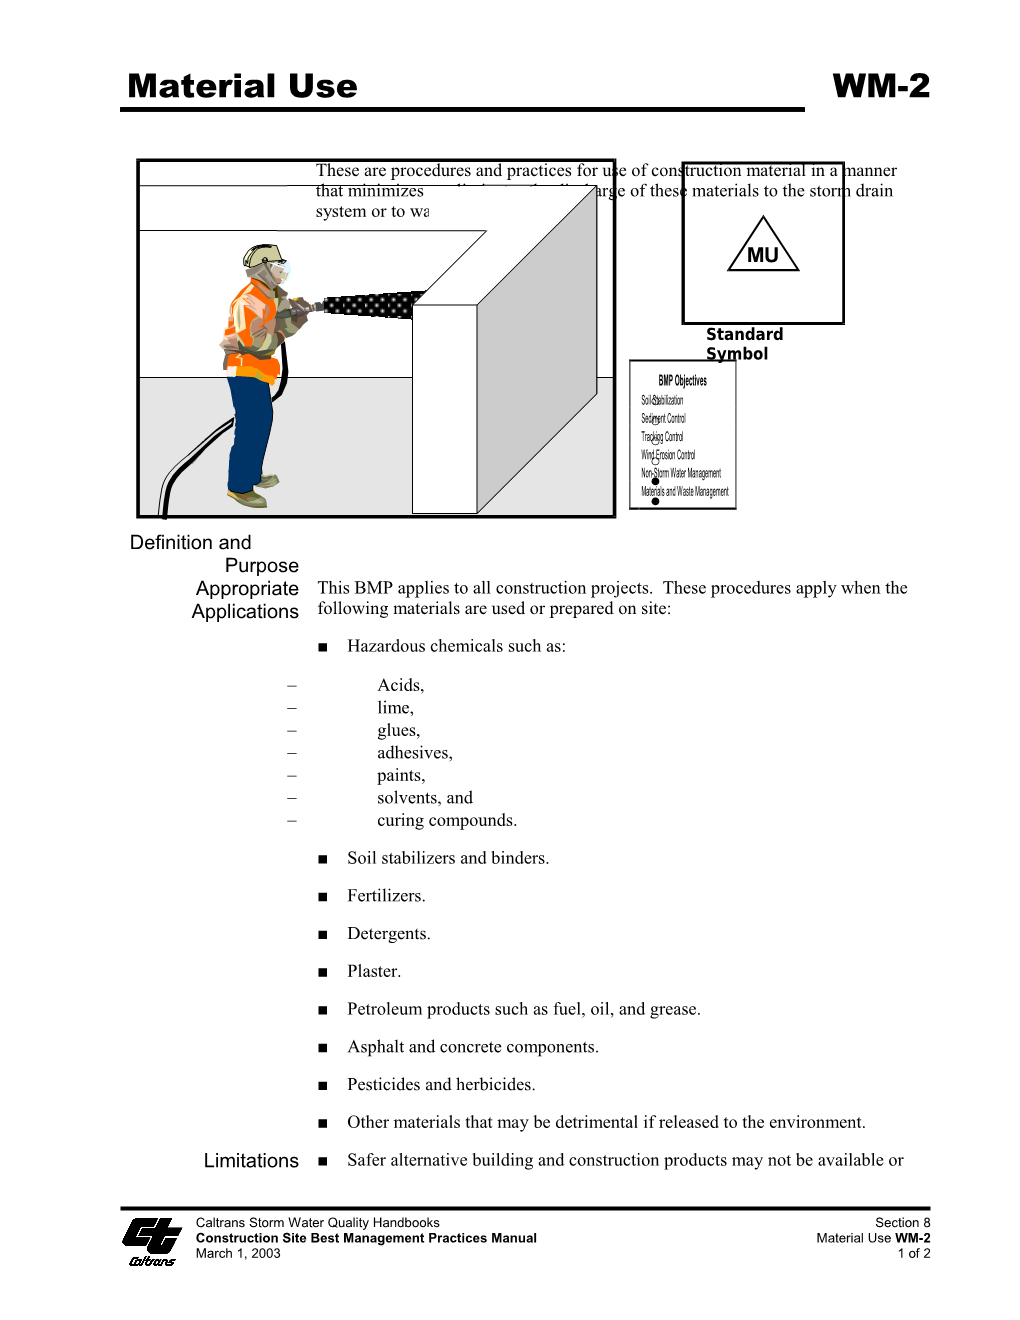 Construction Site Best Management Practices Manualmaterial Use WM-2